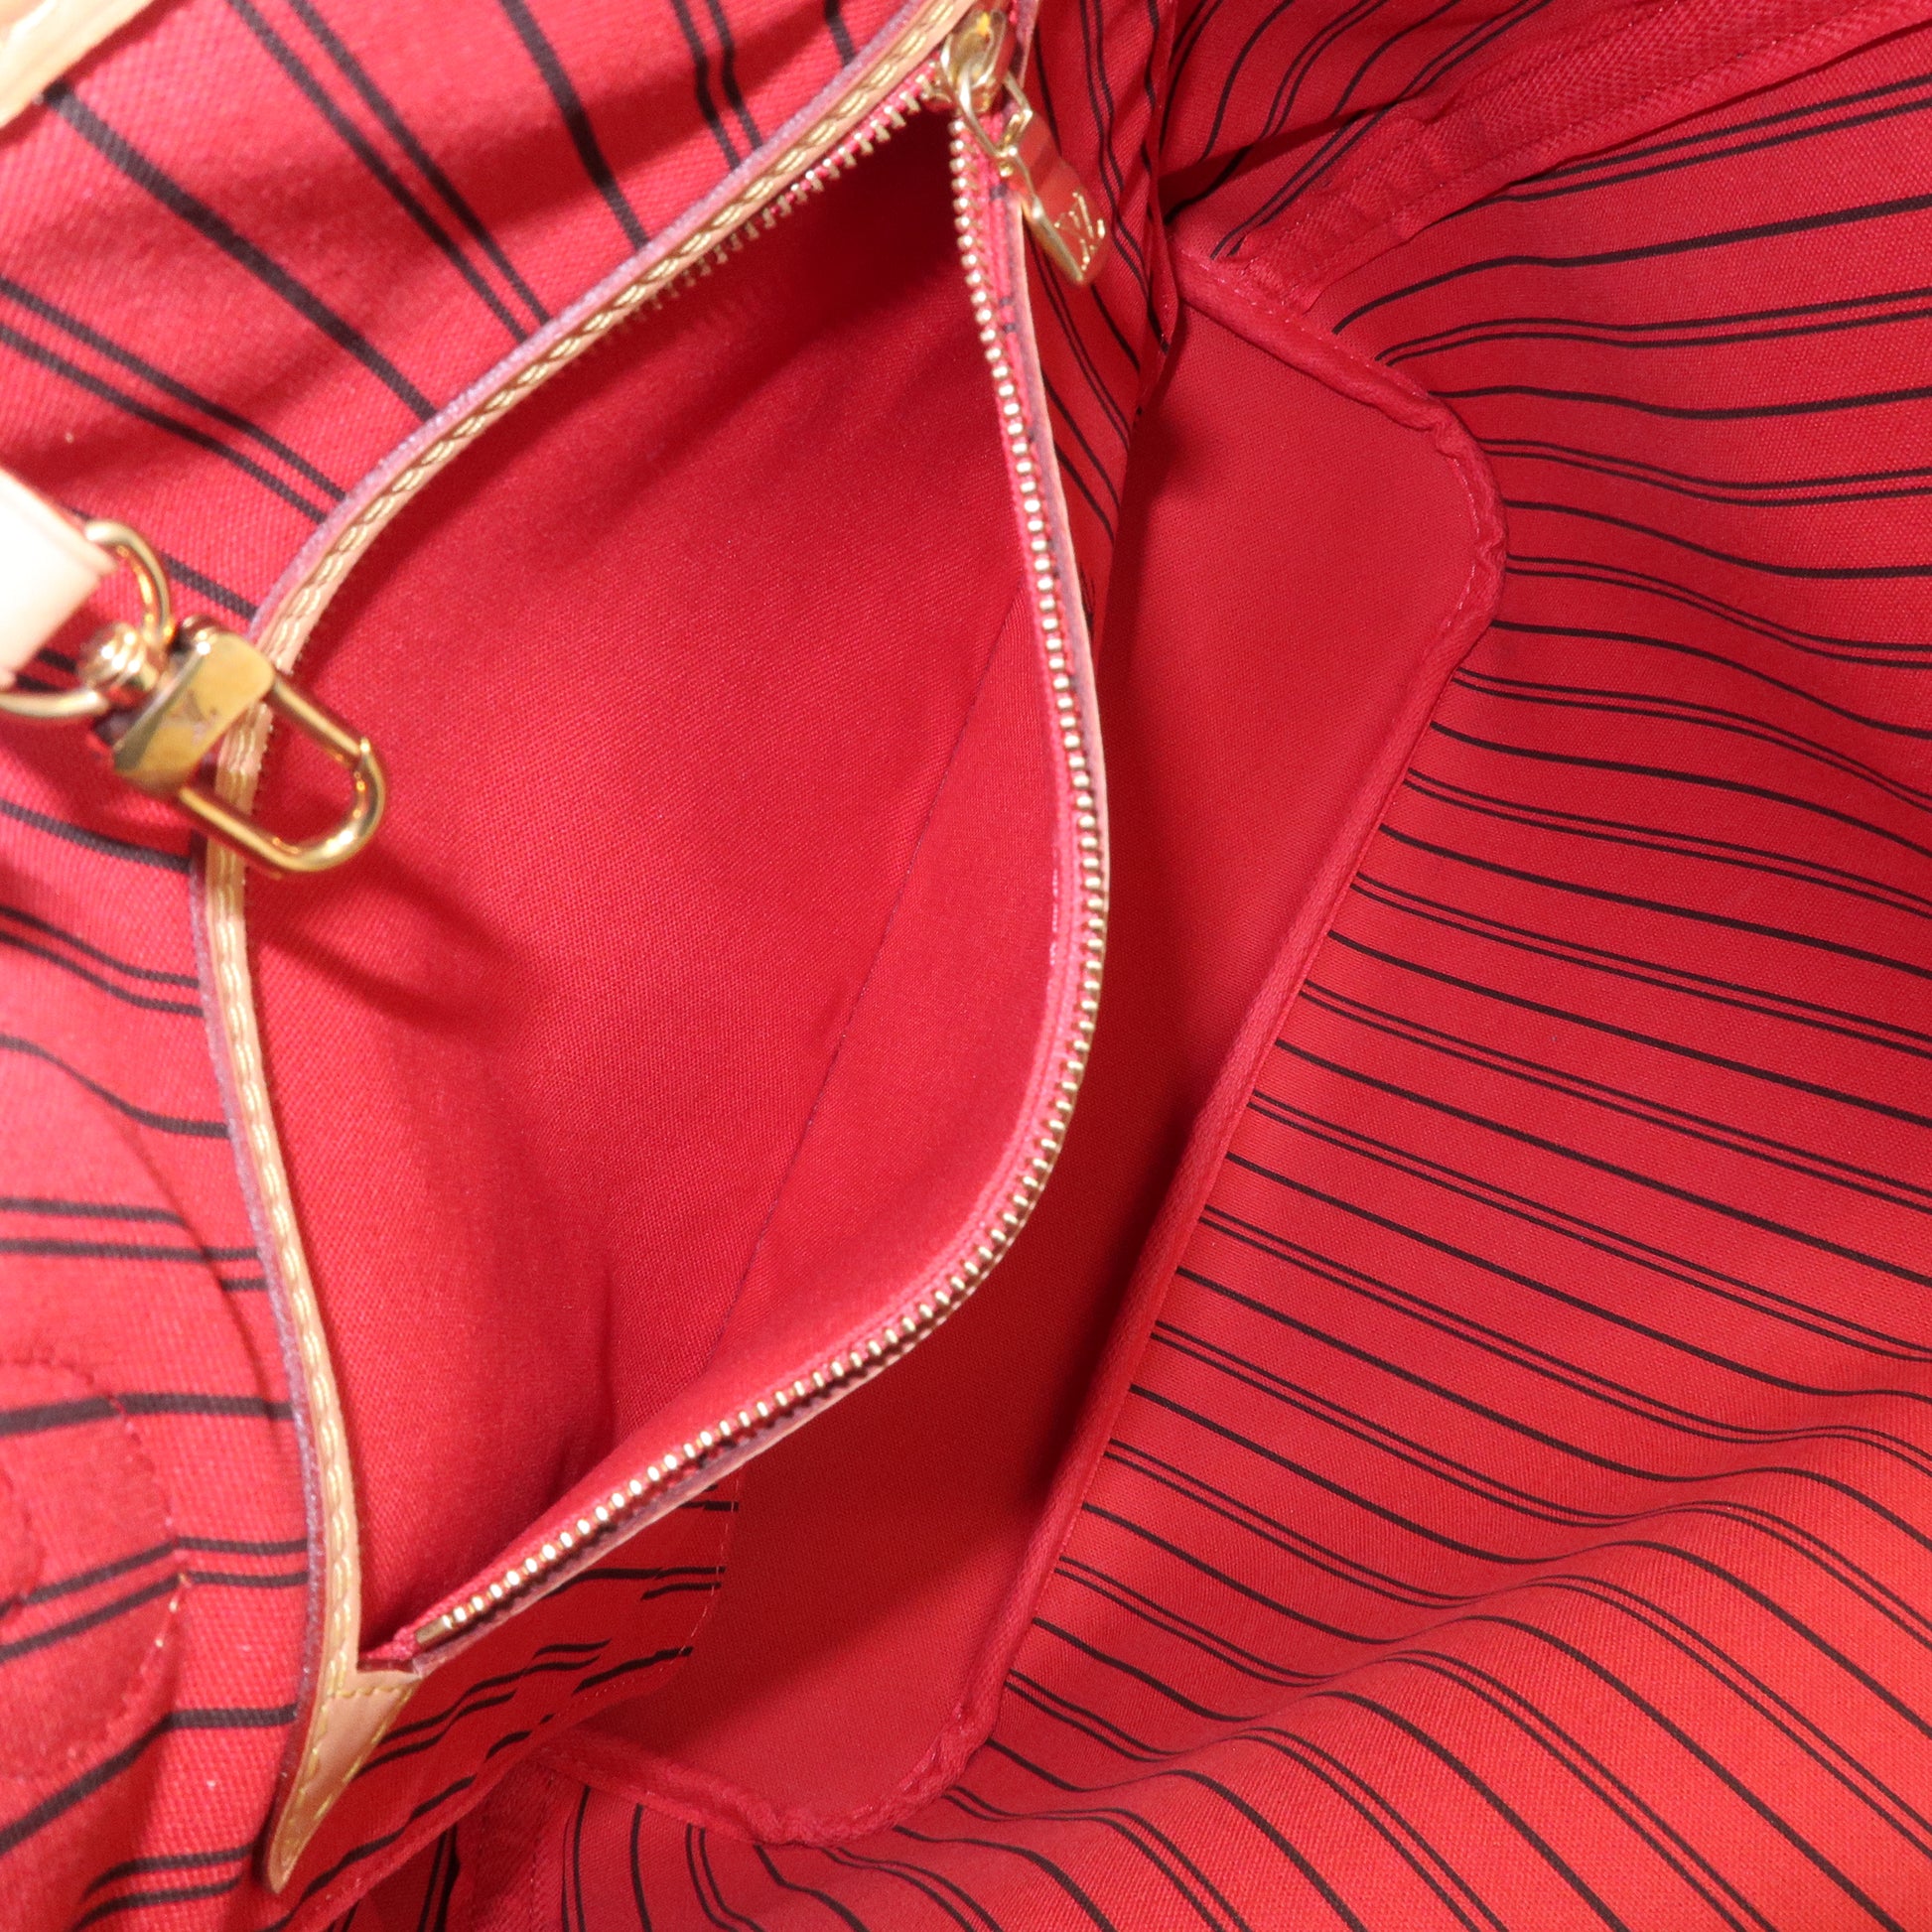 Authentic Louis Vuitton Neverfull MM Monogram & Cerise Red Interior  With Receipt